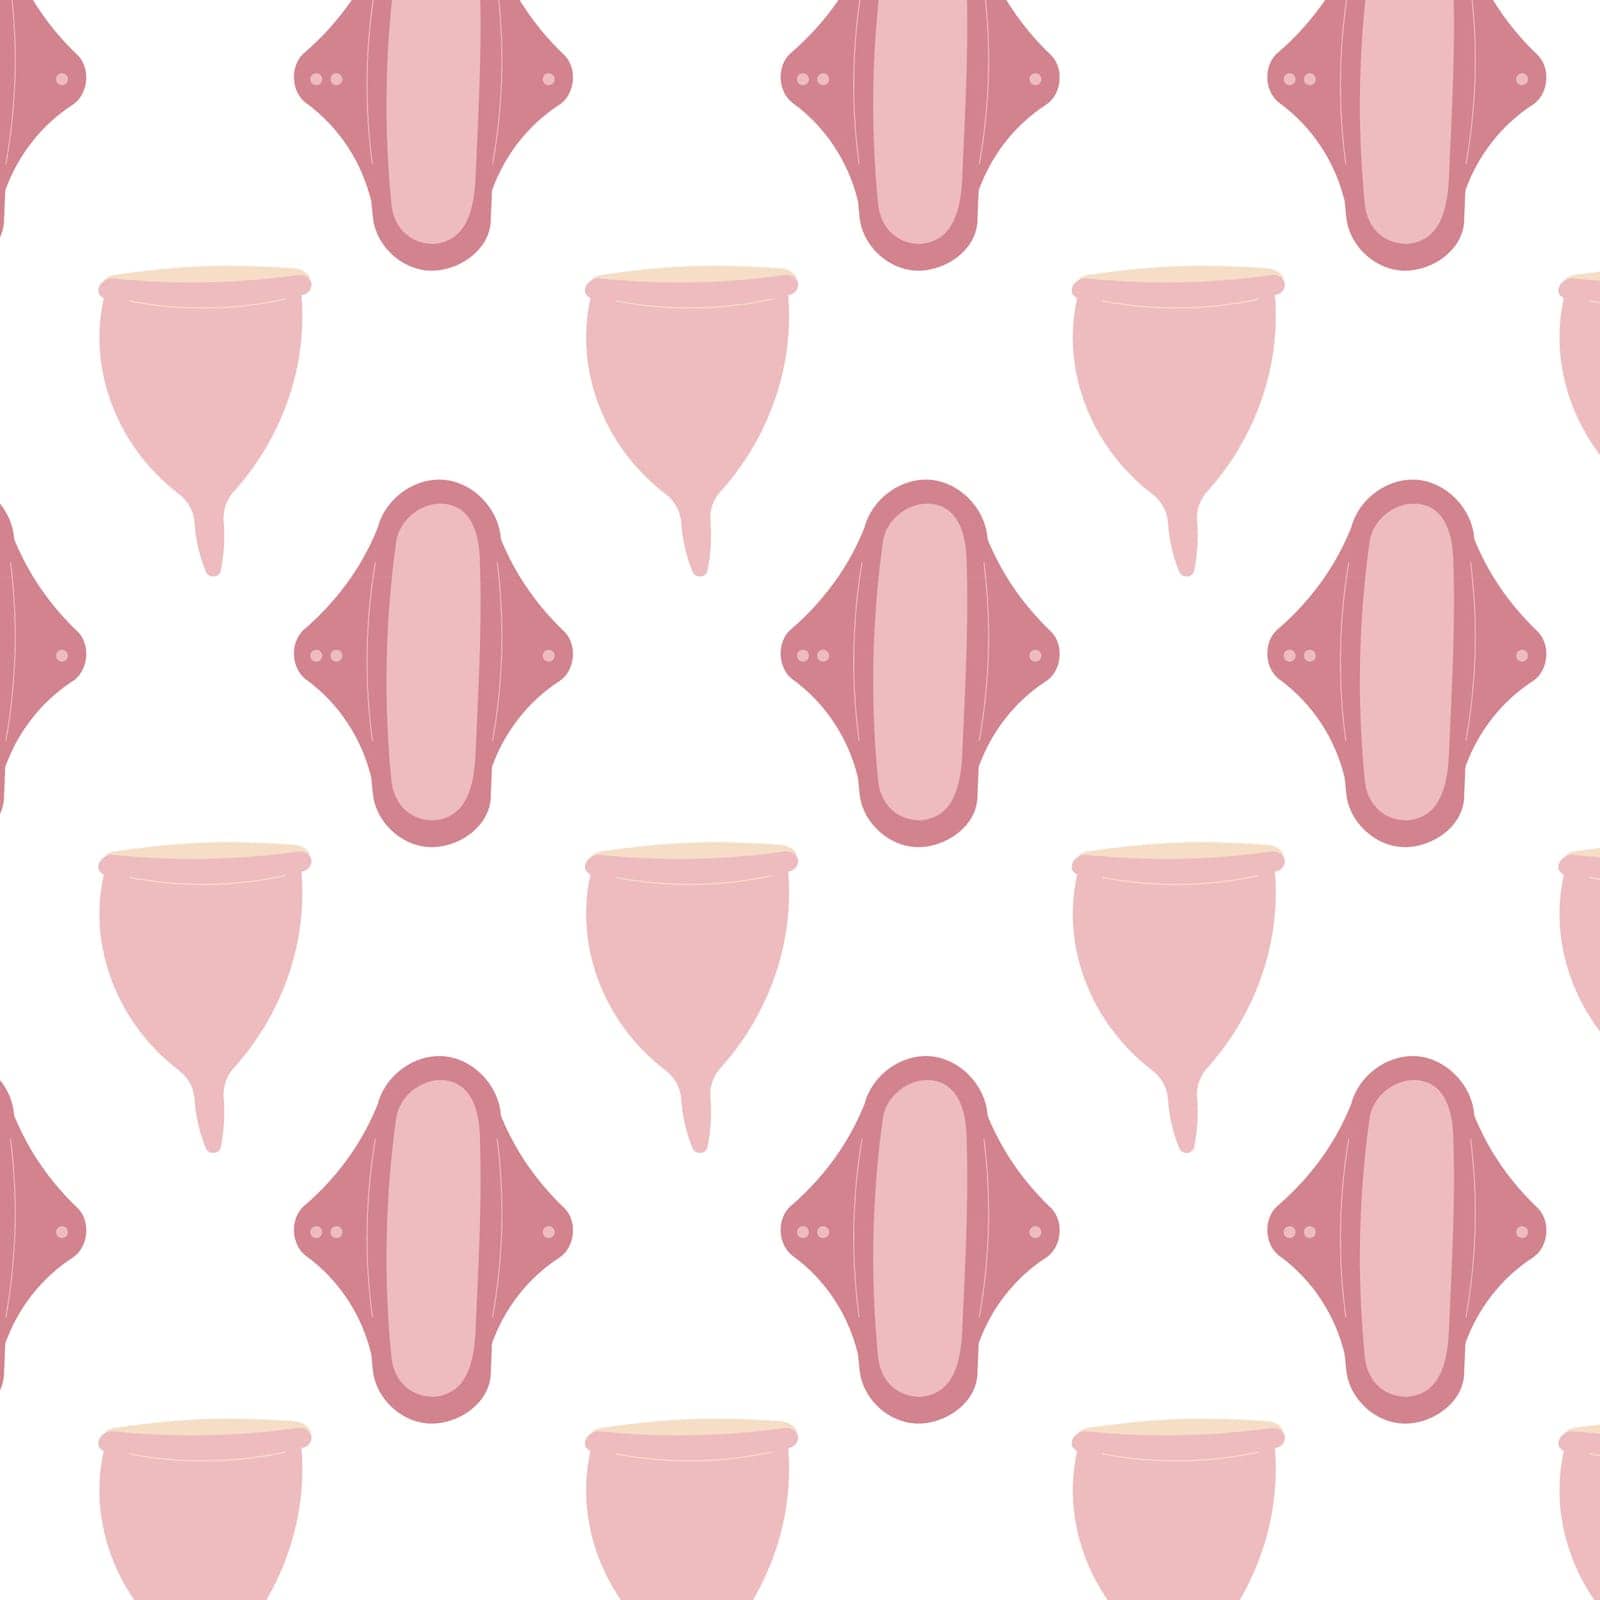 feminine hygiene menstrual cup pad eco bio by kristushka_15_108